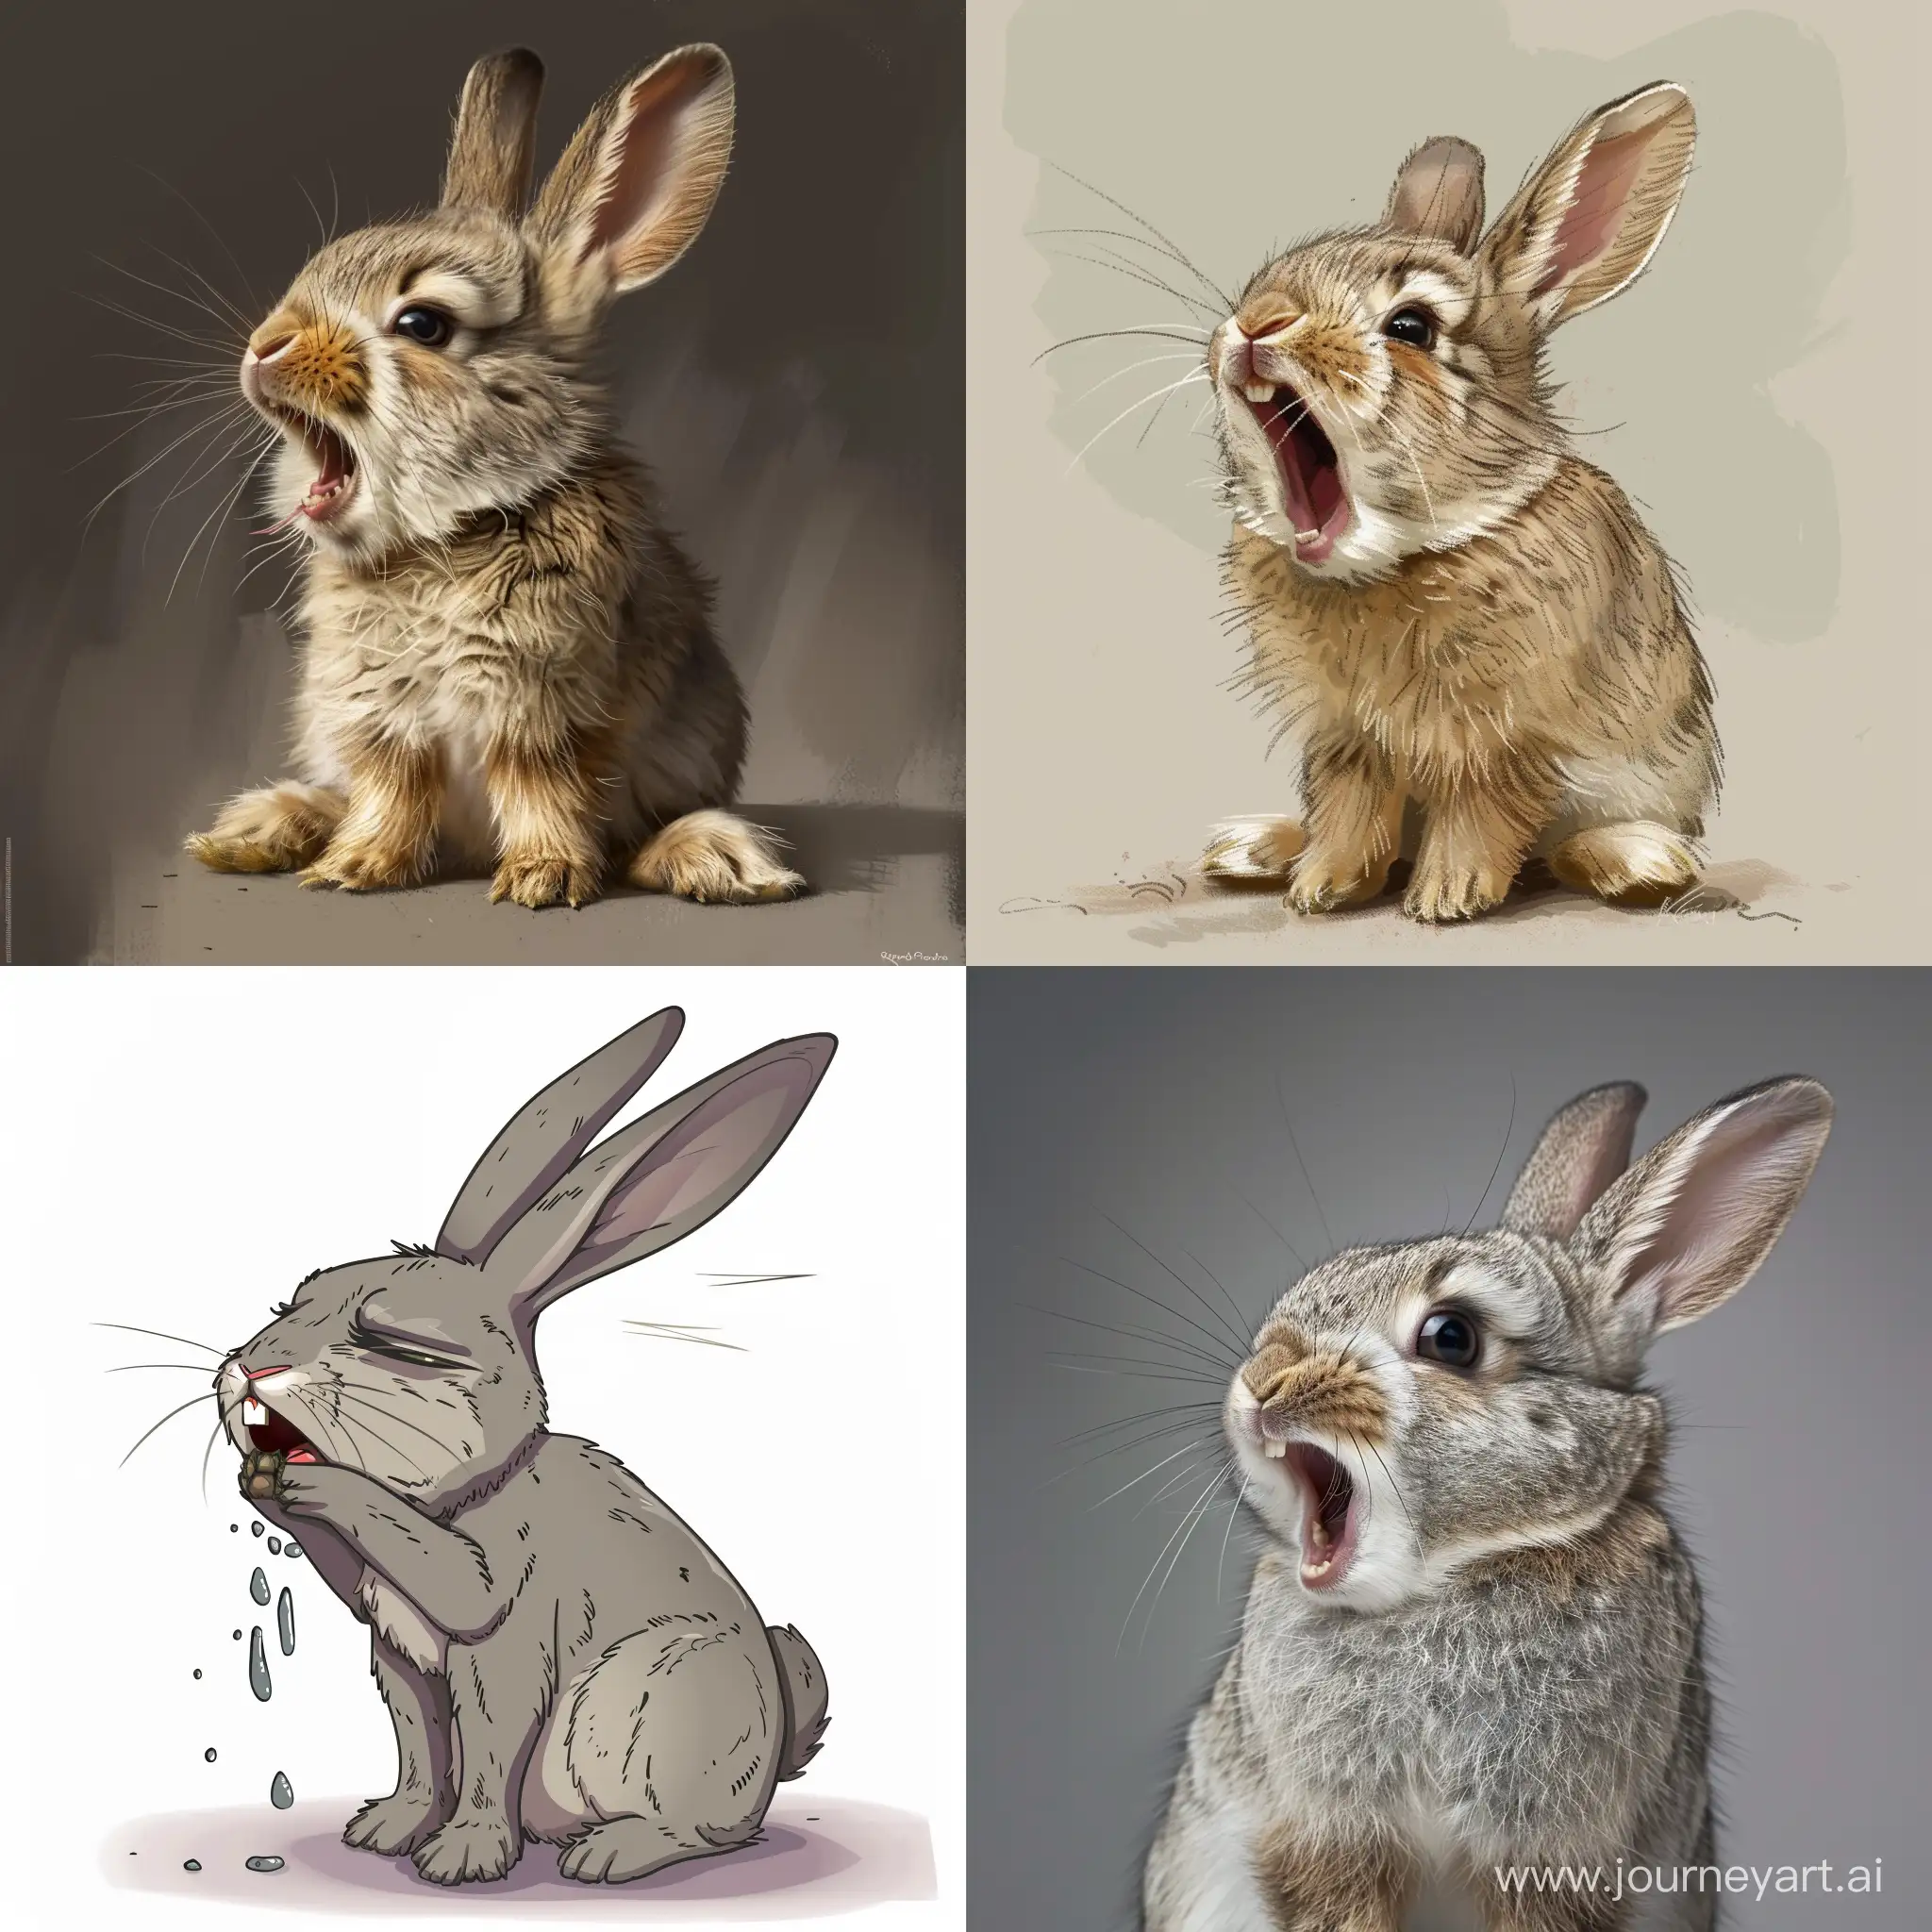 Sorrowful-Rabbit-Shedding-Tears-in-Vibrant-Illustration